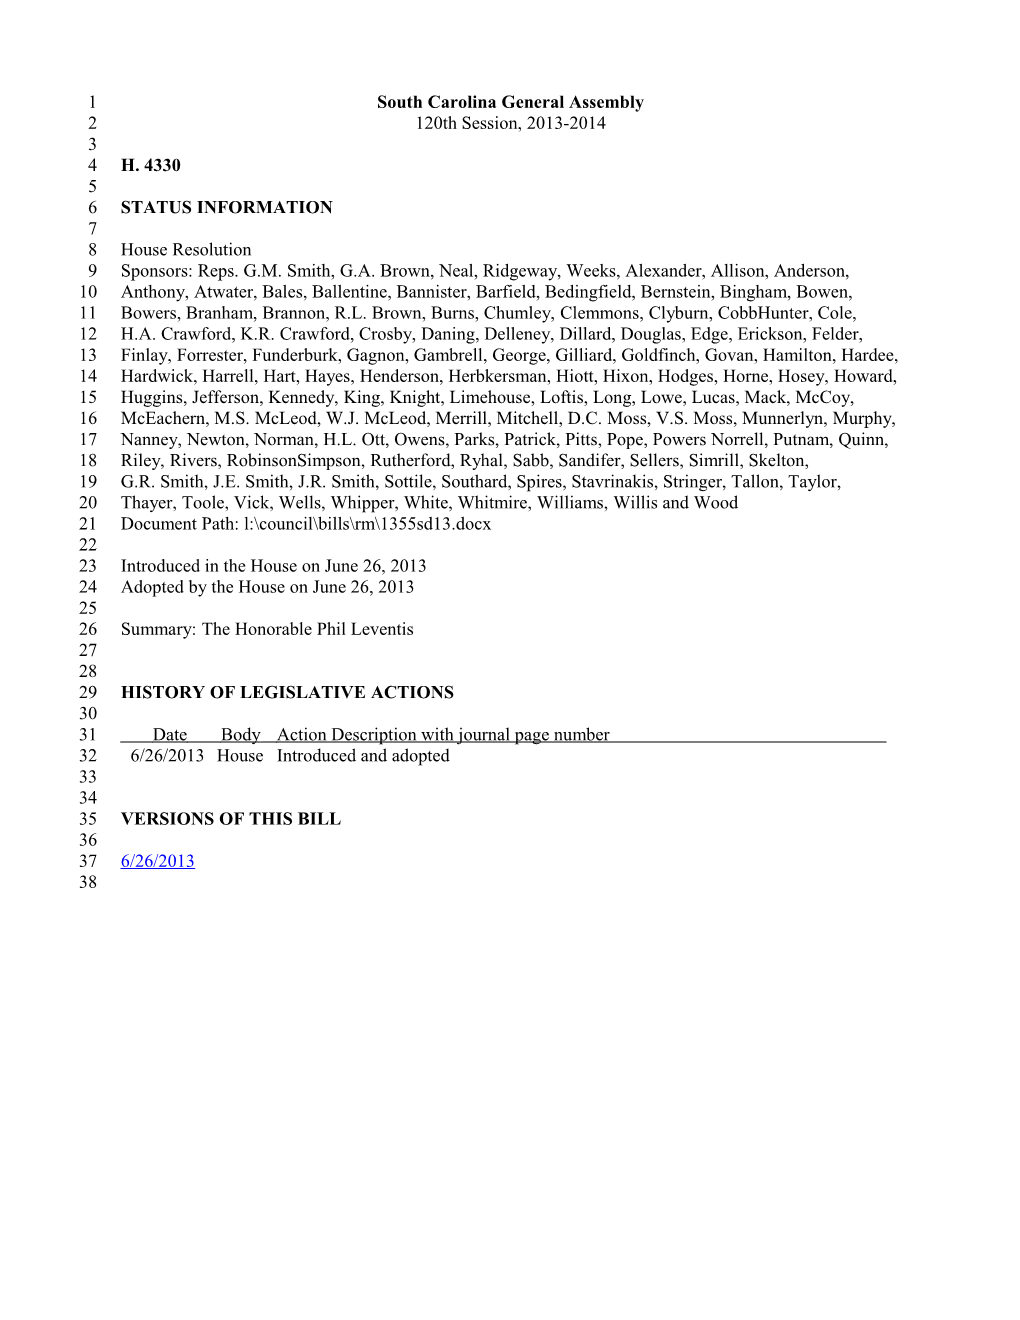 2013-2014 Bill 4330: the Honorable Phil Leventis - South Carolina Legislature Online